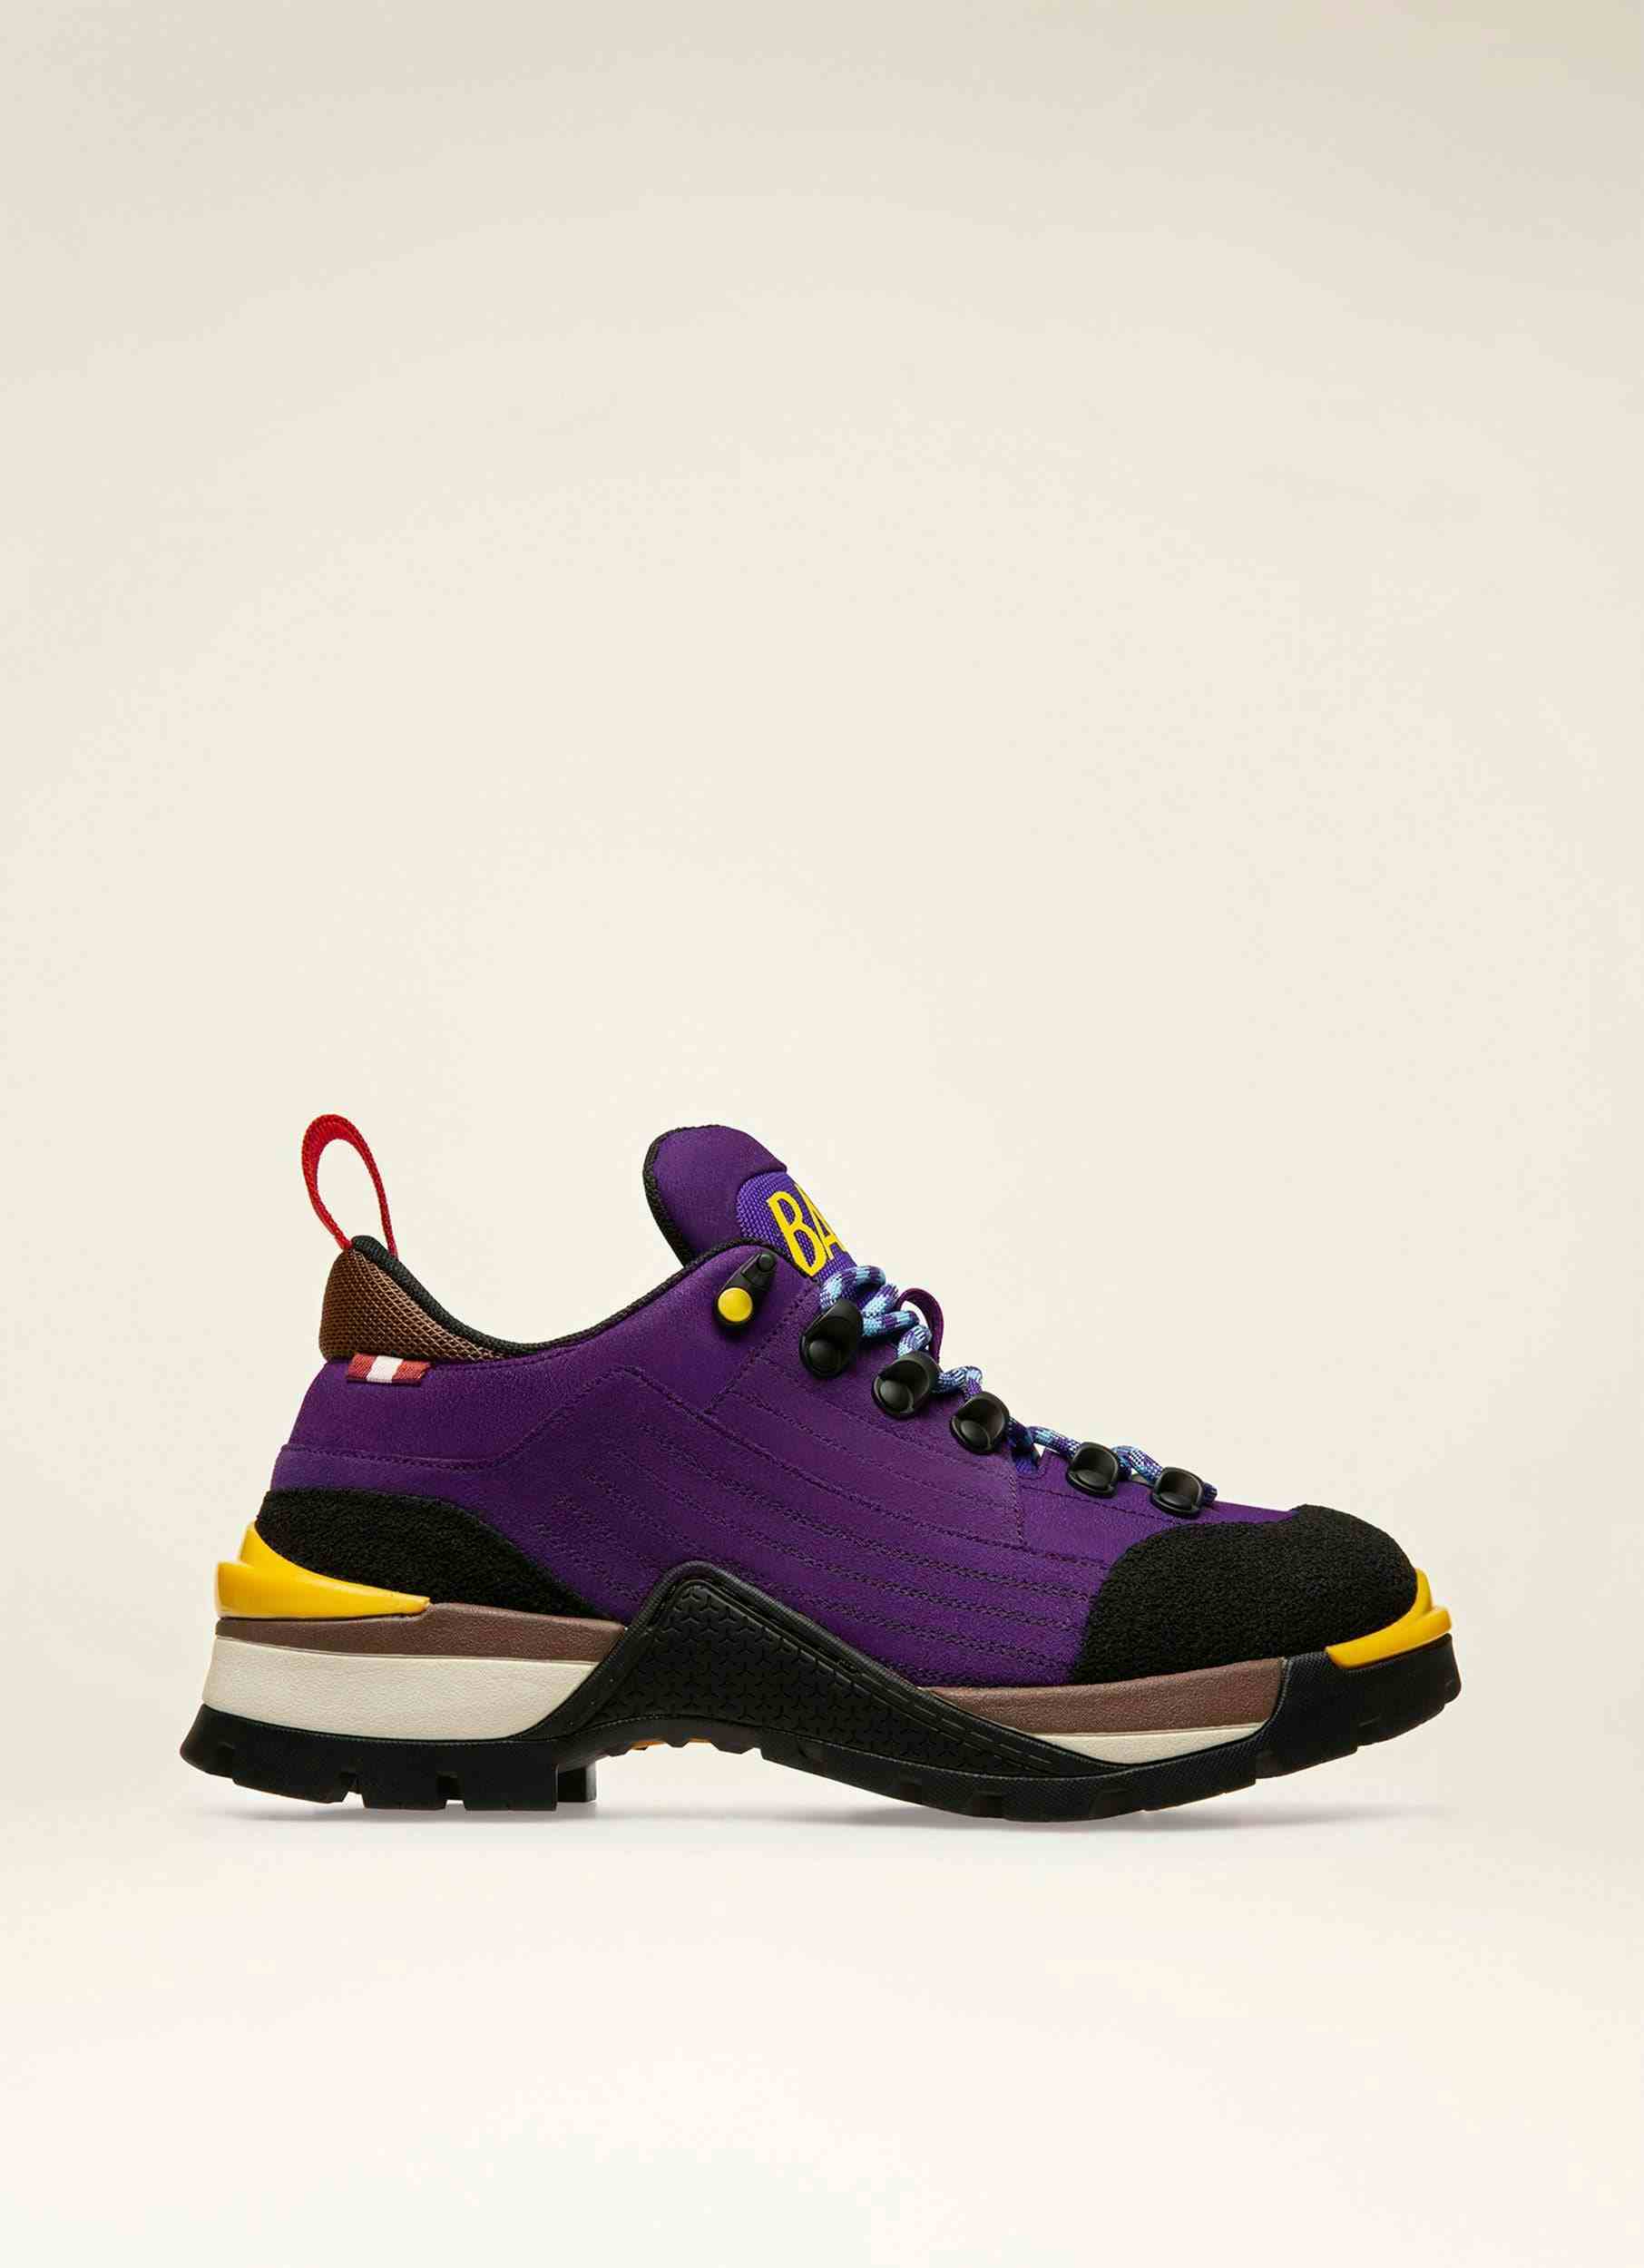 BALLY HIKE Suede Hiking Shoes In Purple - Women's - Bally